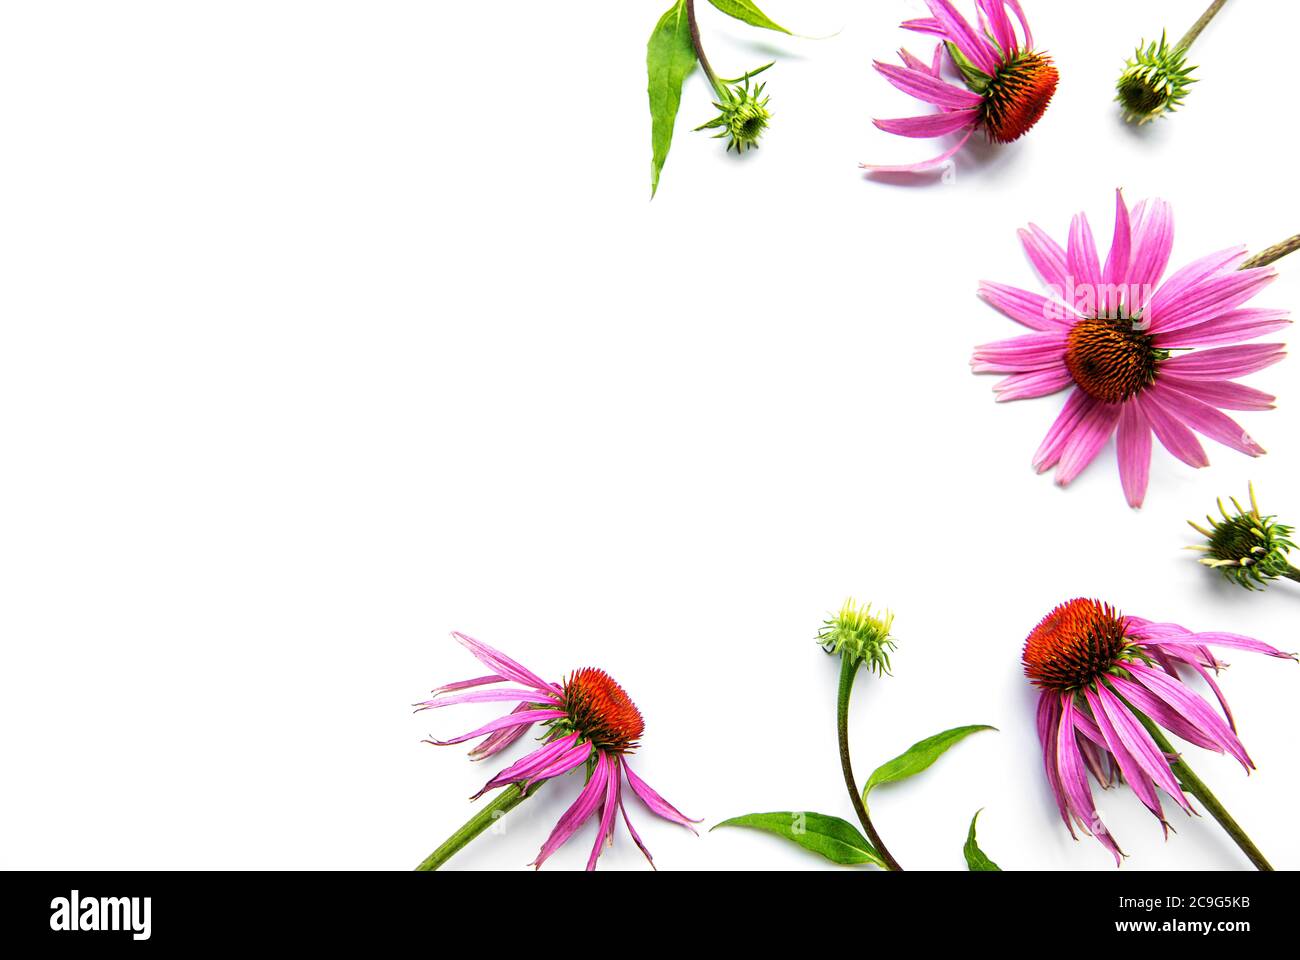 Echinacea flower isolated on a white background Stock Photo